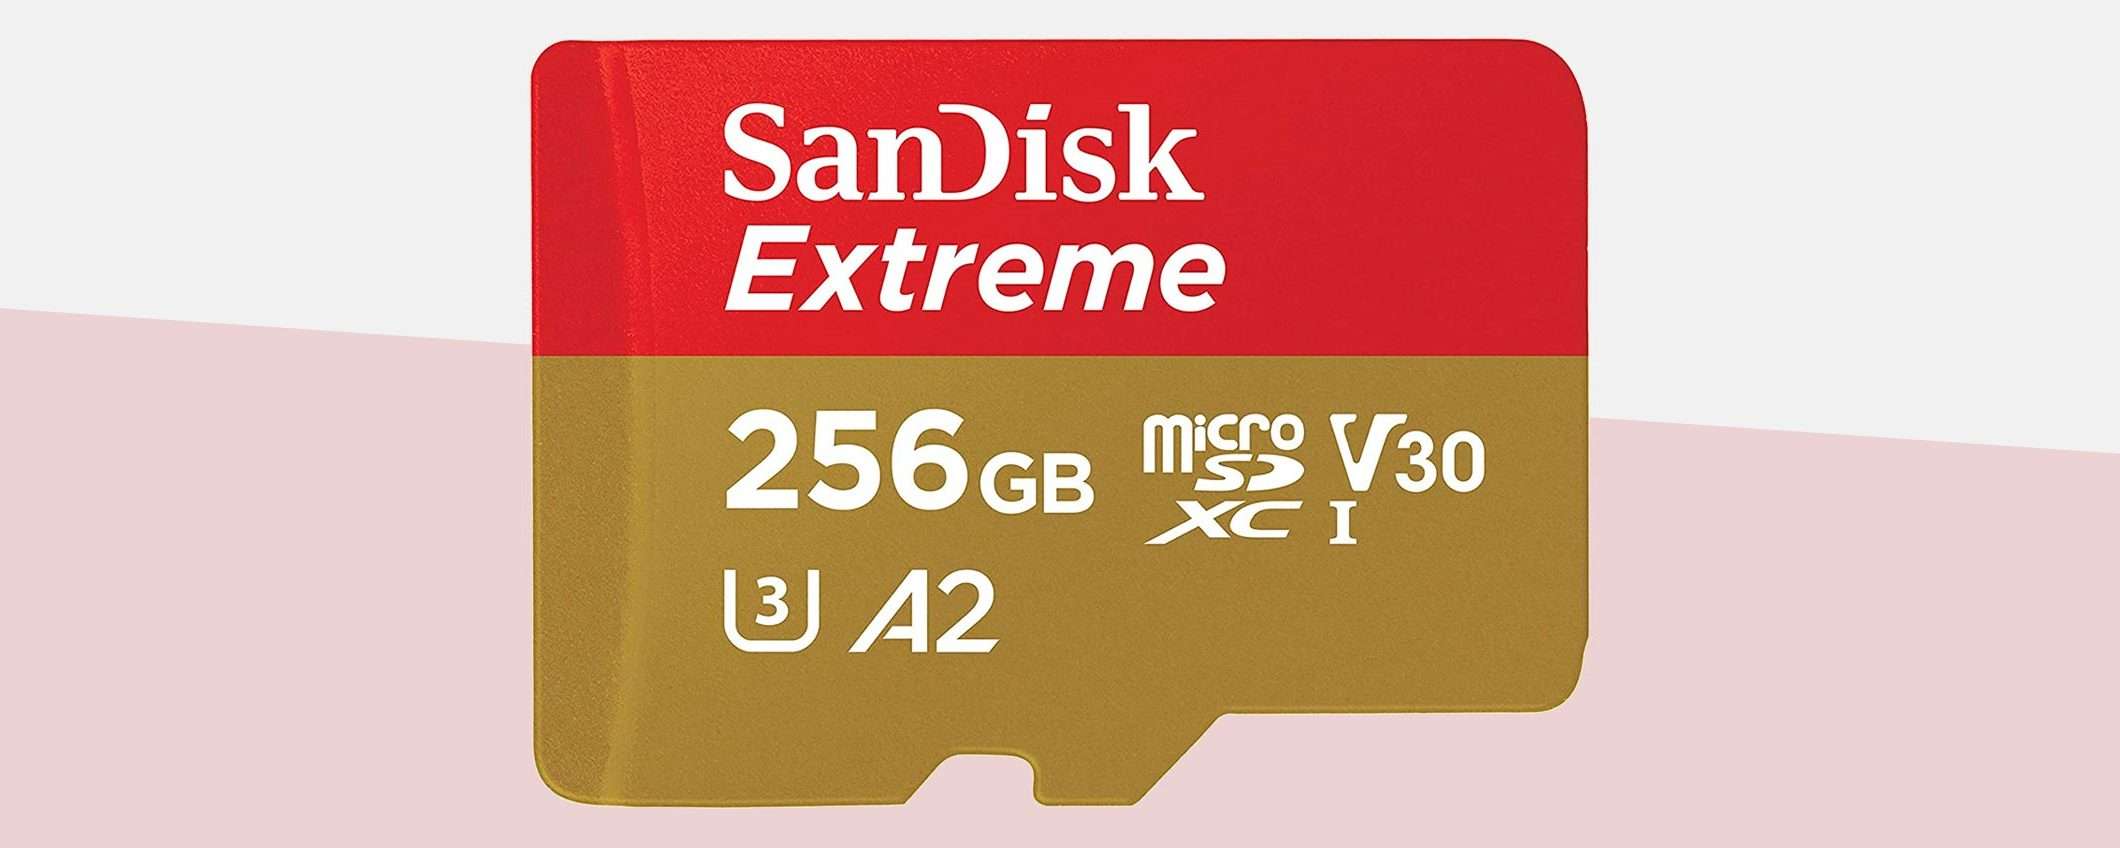 SanDisk Extreme: microSD 256 GB a metà prezzo